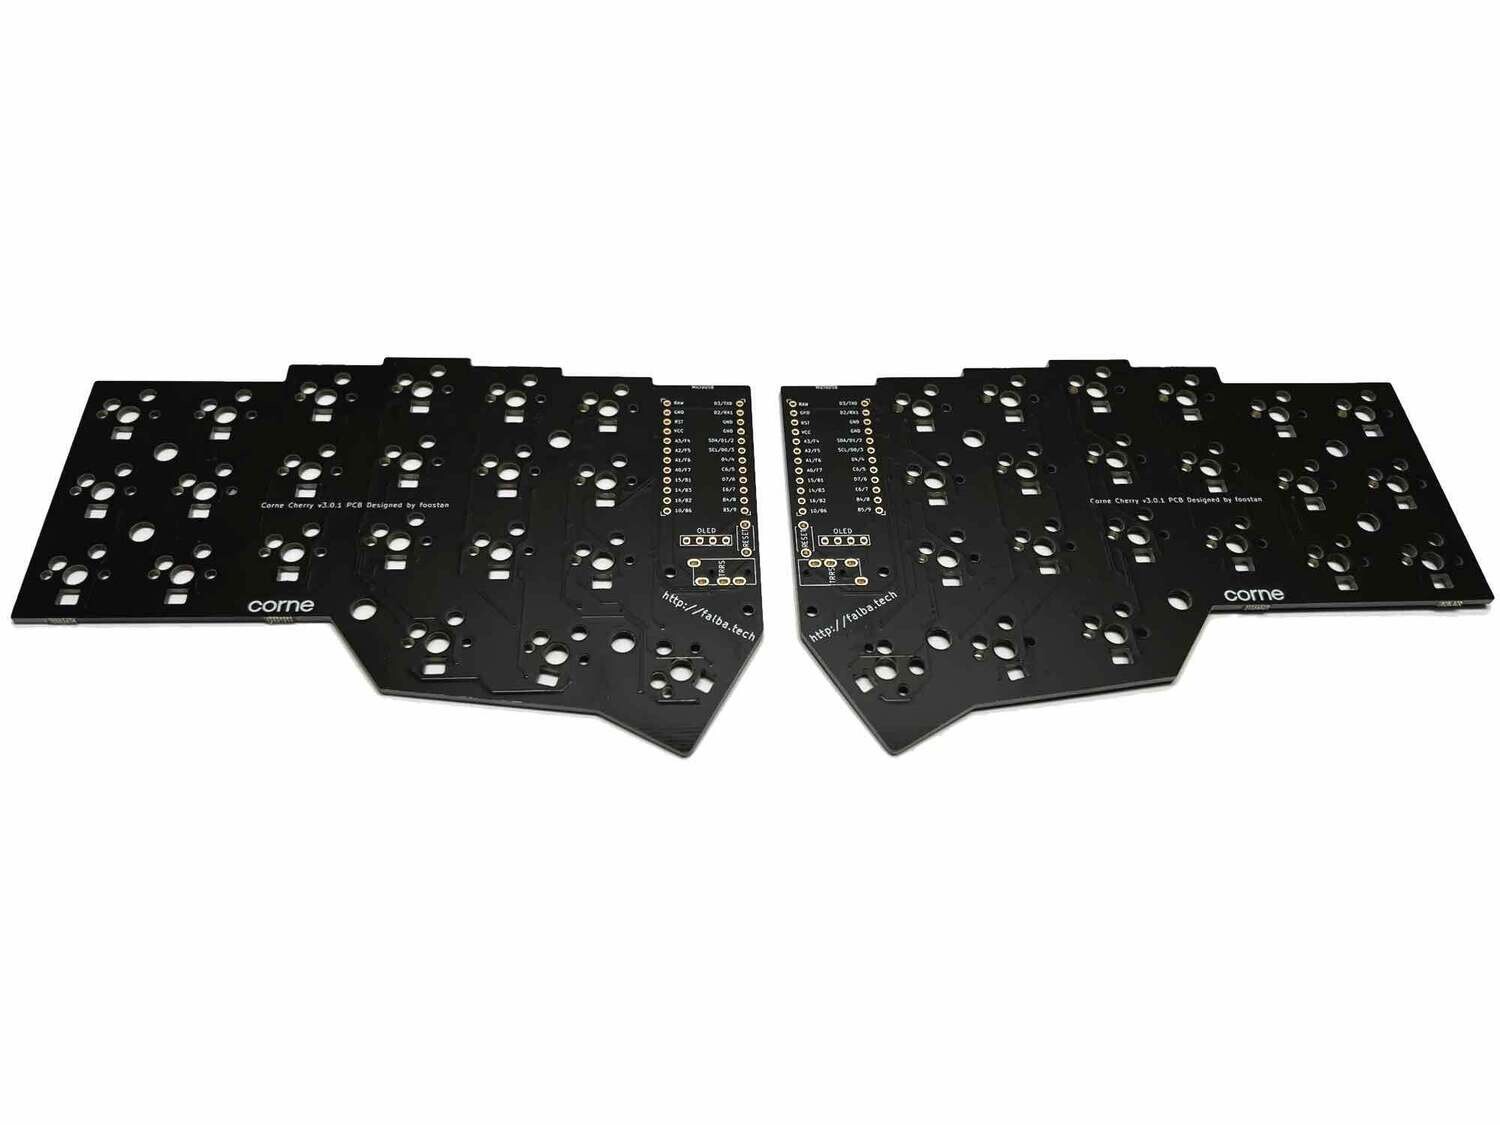 HeliDox (corne) PCB Electrical Boards (Set of 2)